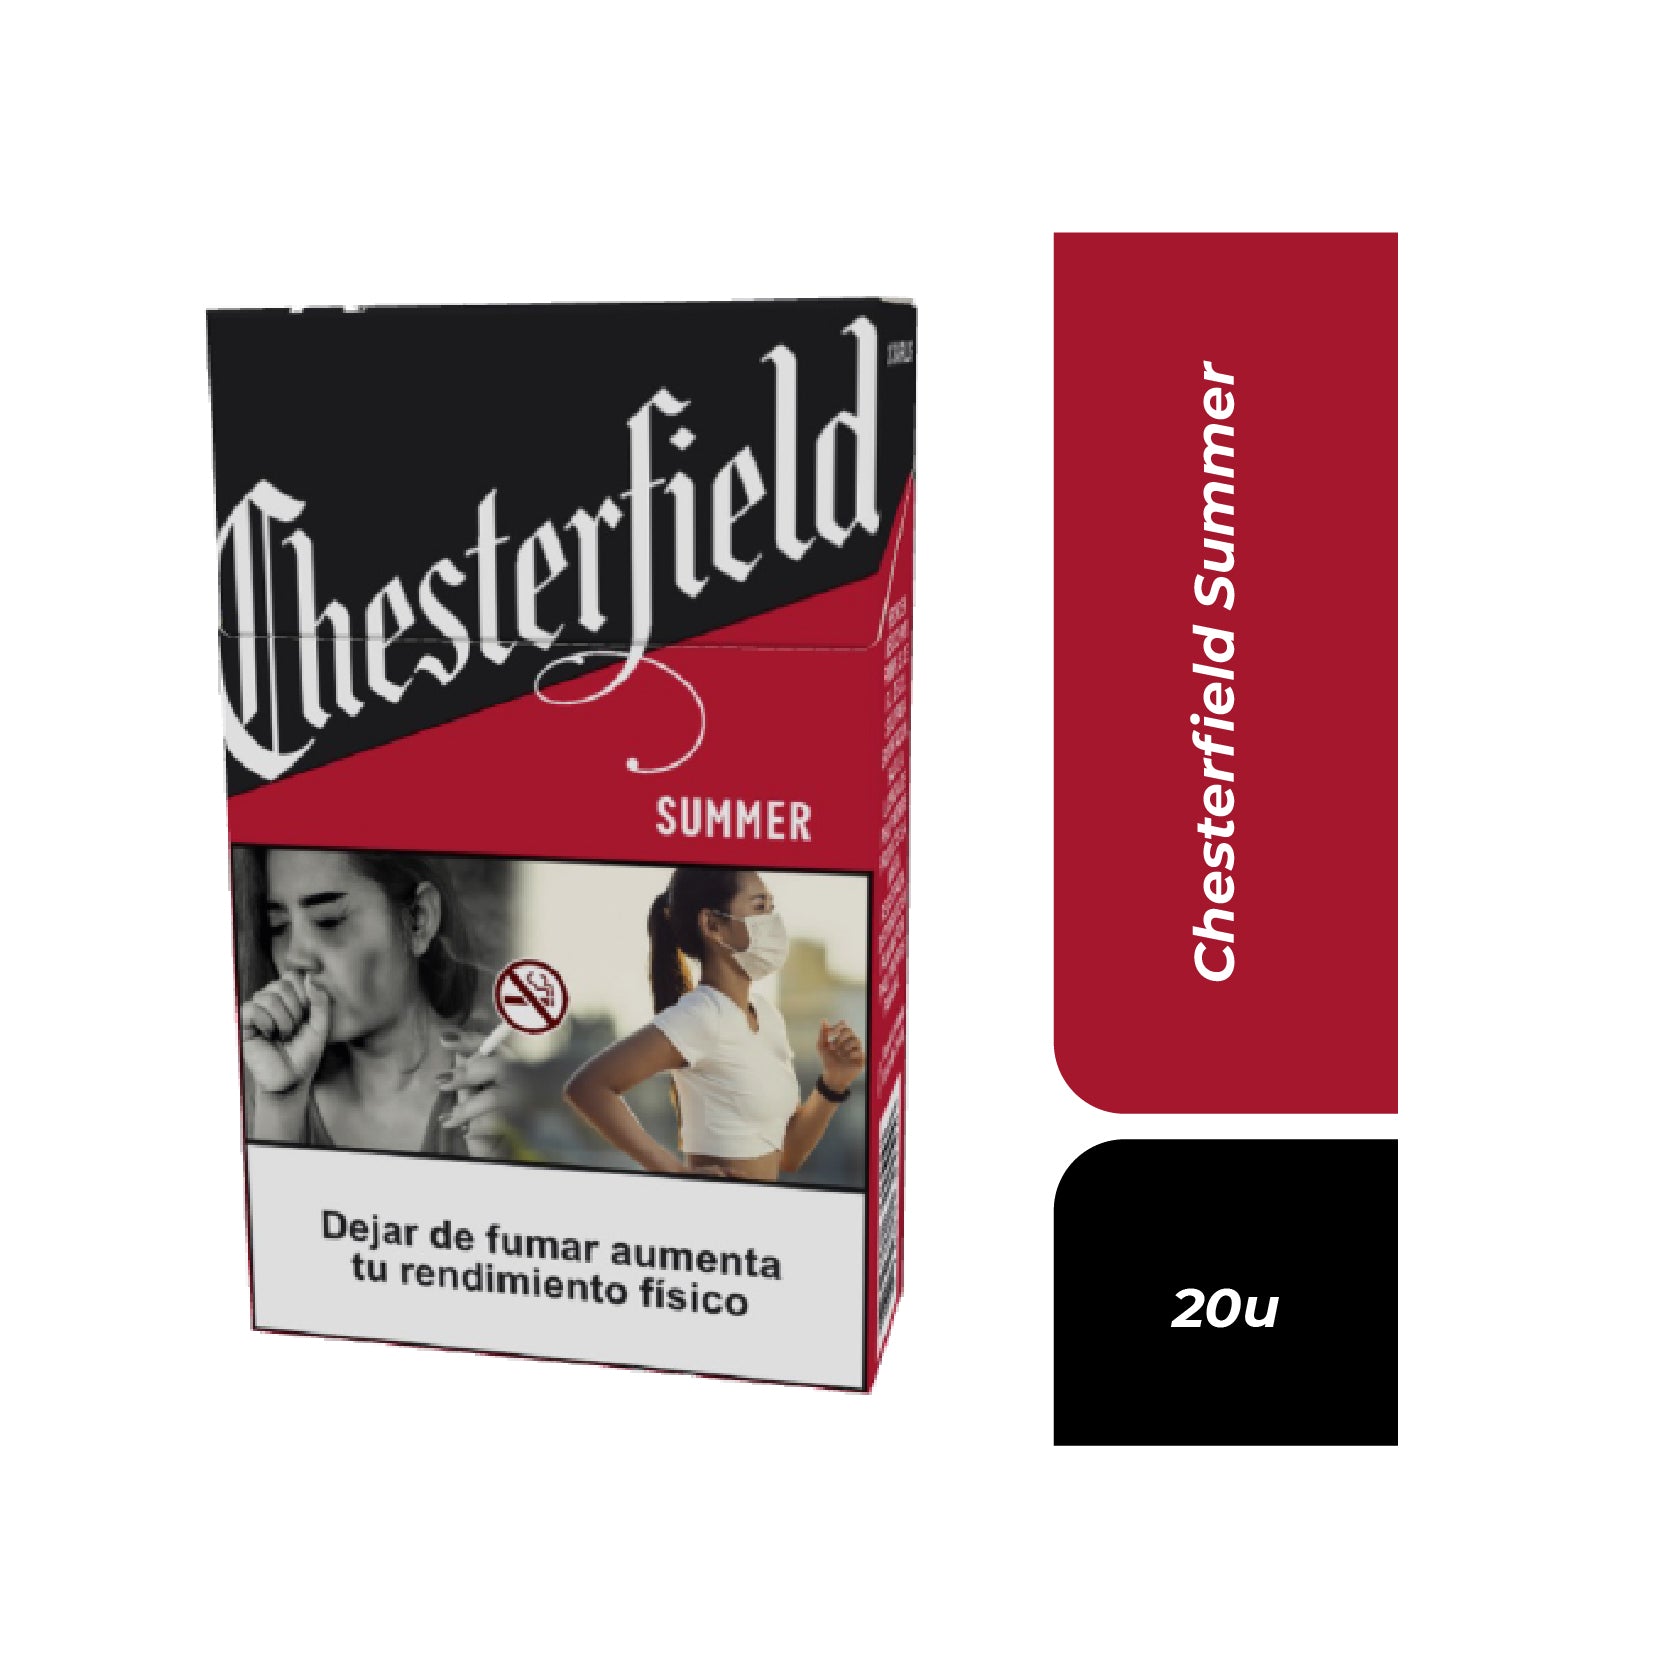 Cigarrillos Chesterfield Summer